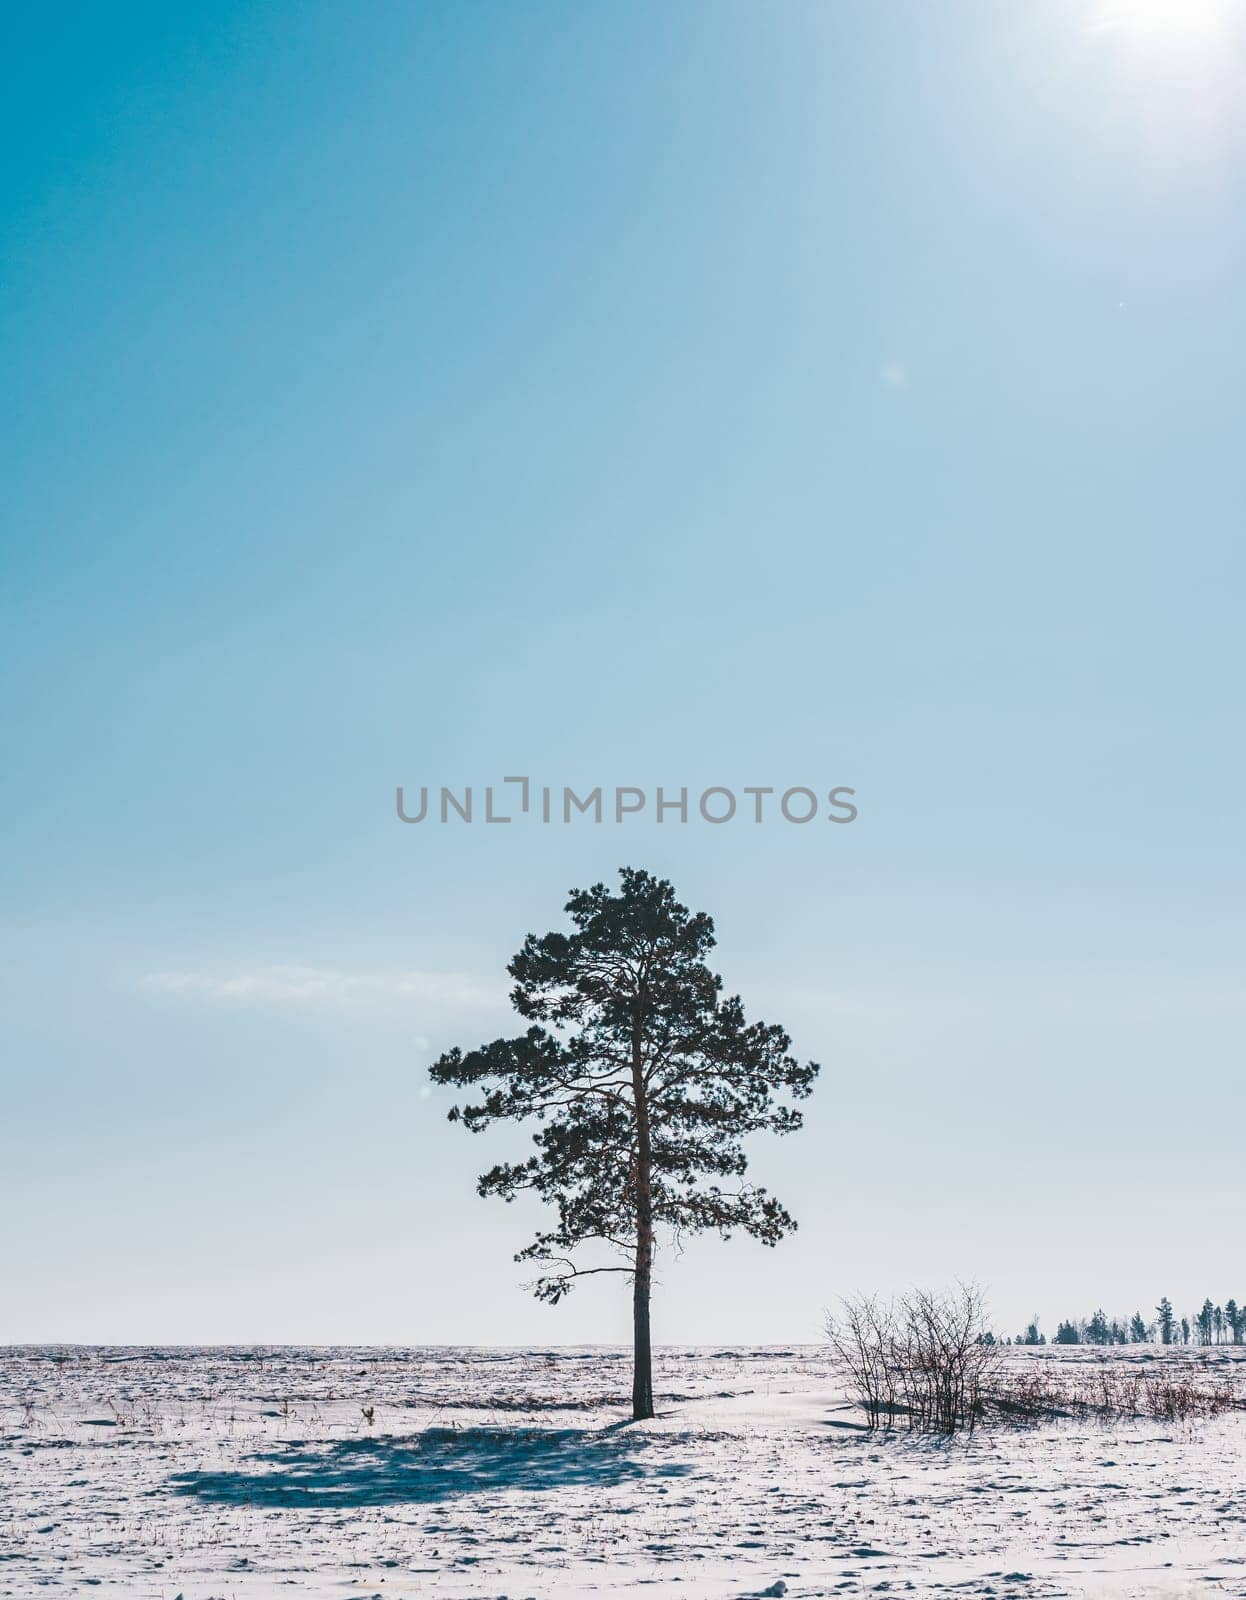 Solitary pine tree standing in snowy field under clear blue sky by Busker